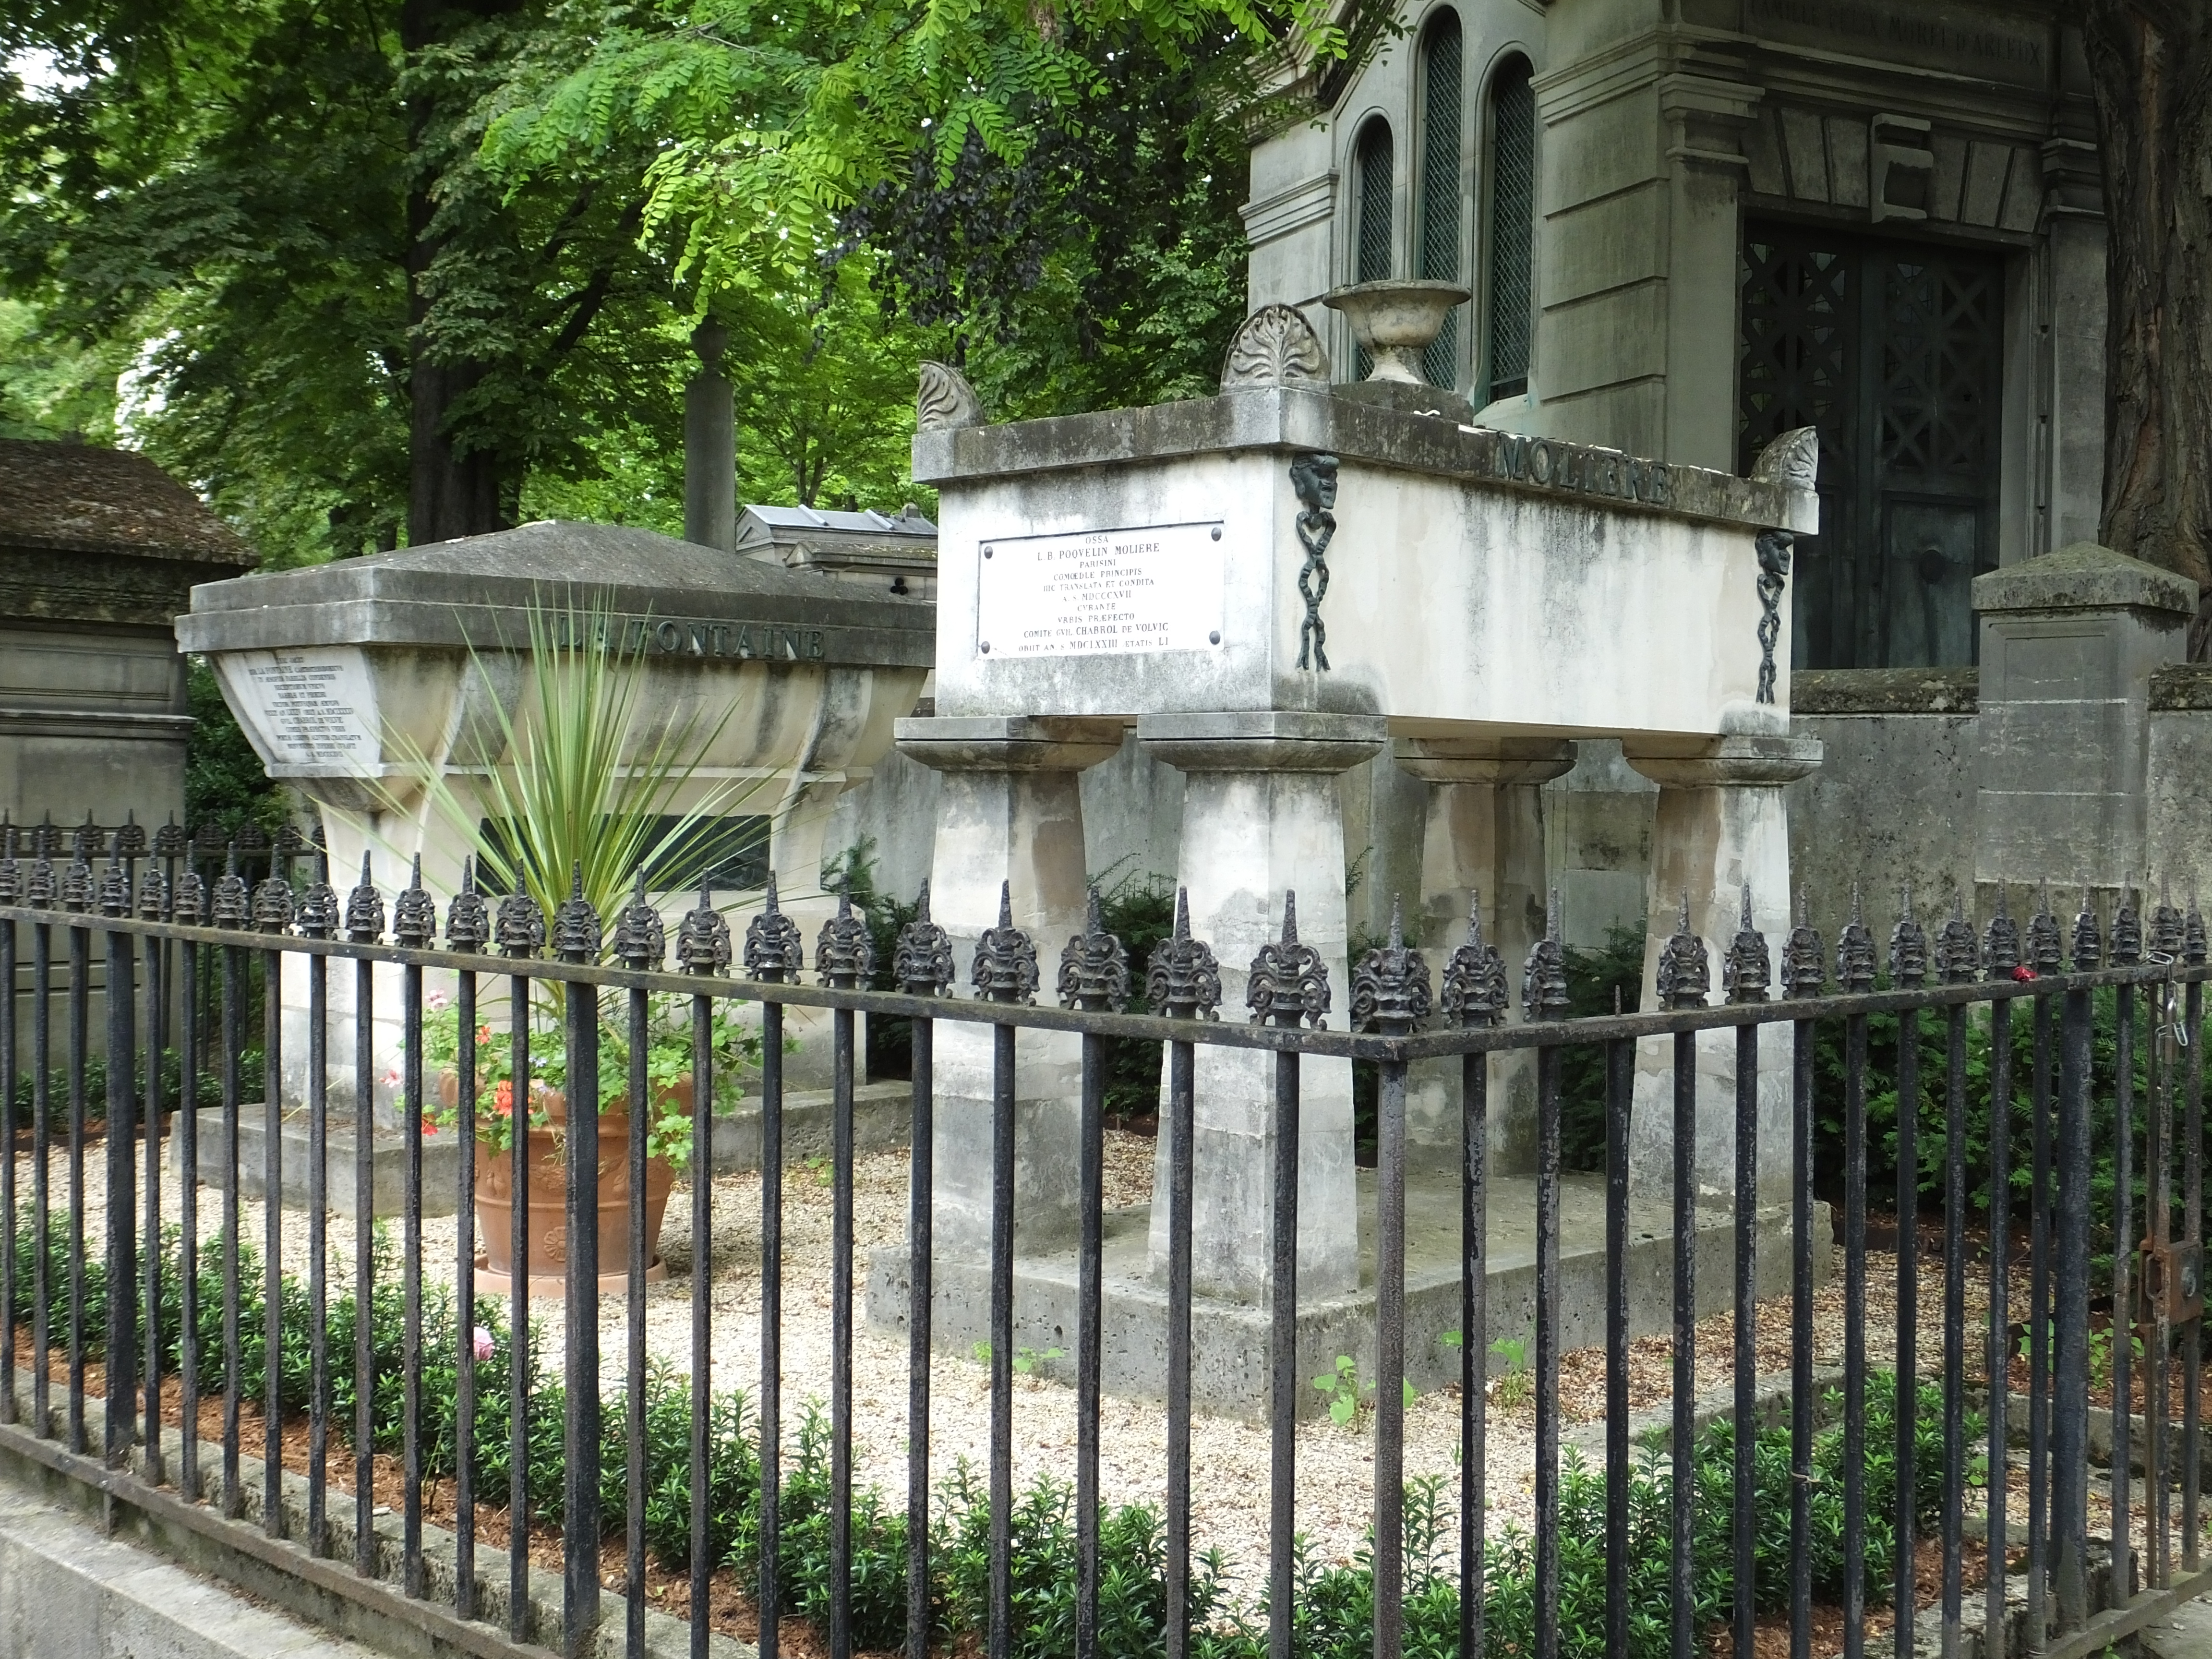 Companion graves of Moliere and La Fontaine